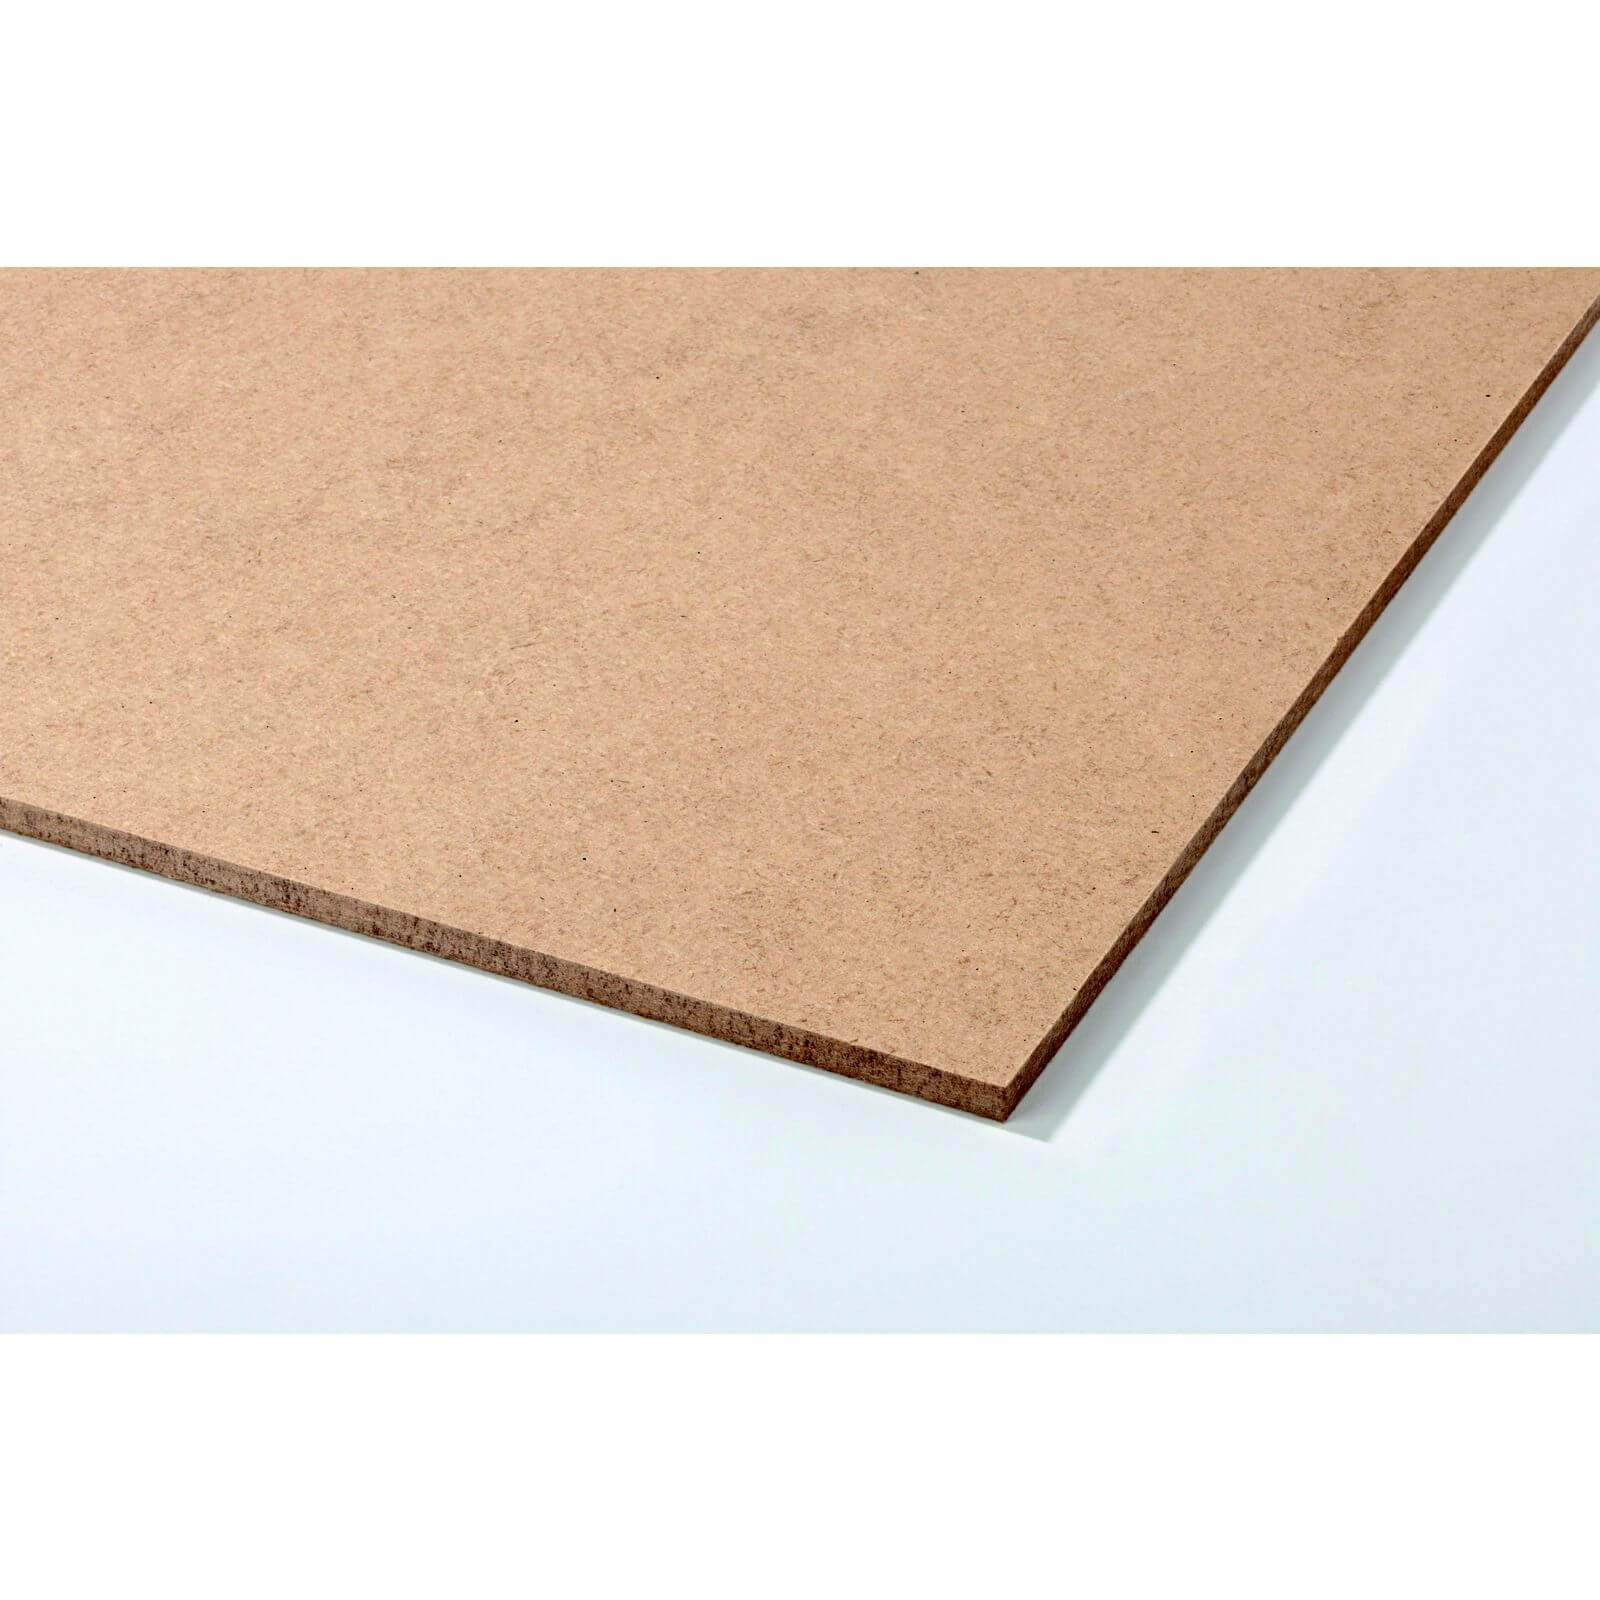 Metsa HDF Hardboard Sheet Board 1.8m (1829 x 607 x 3mm)